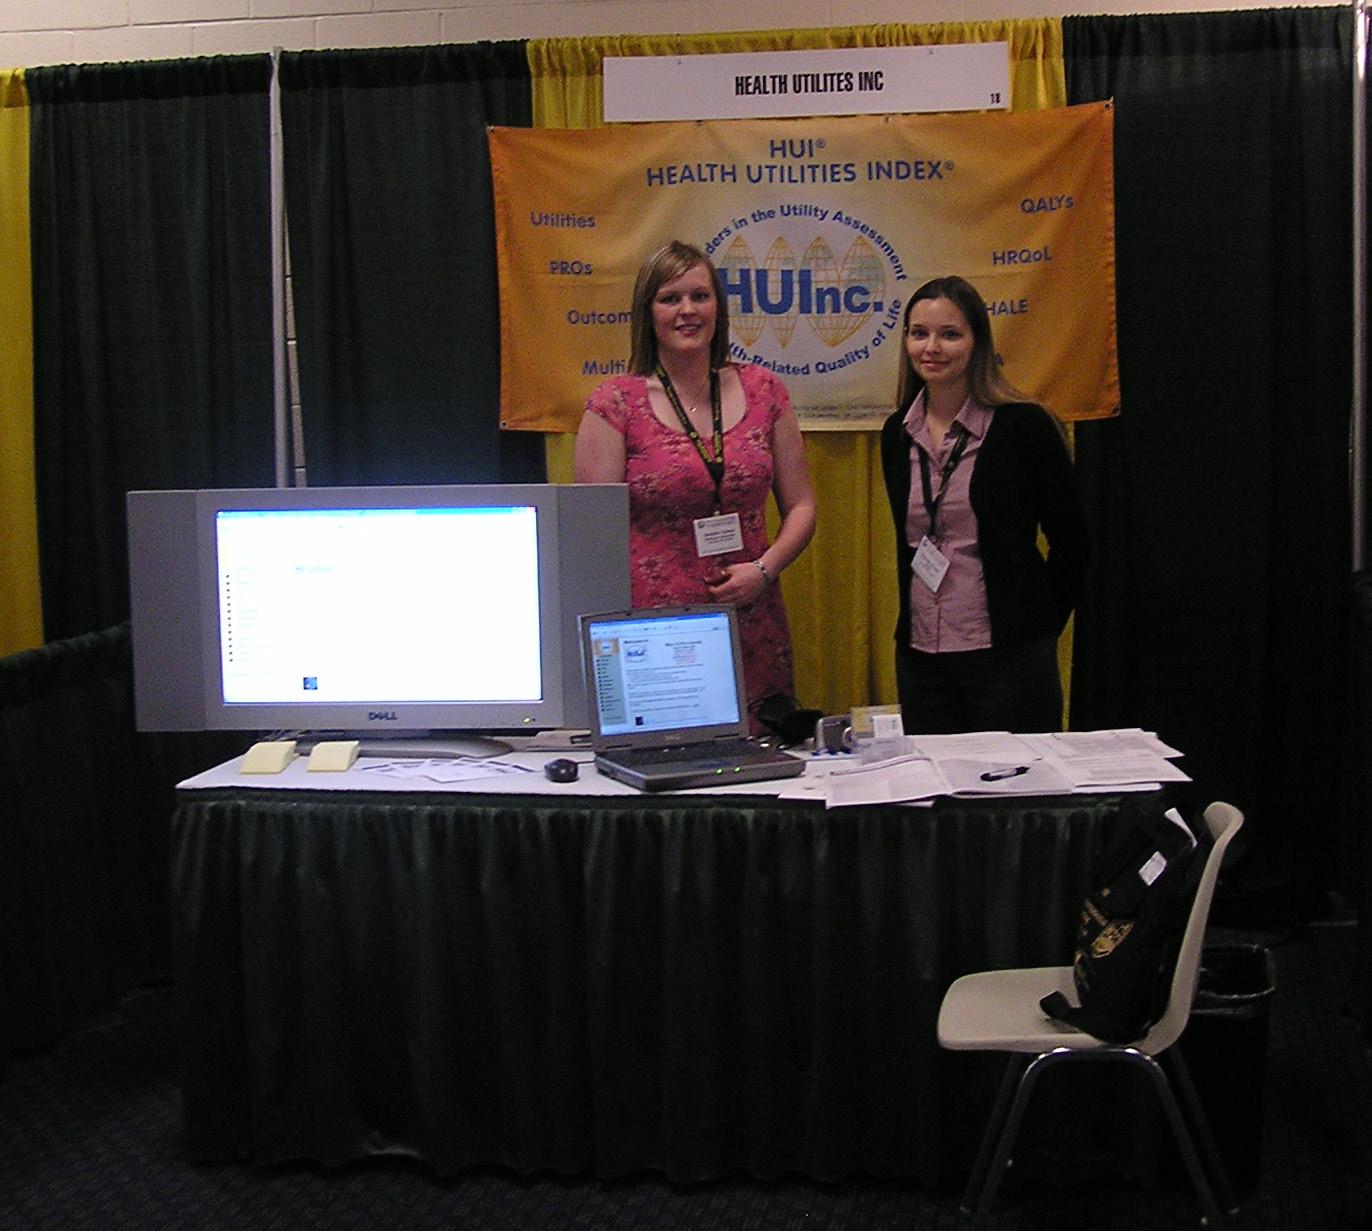 Danielle Talsma and Danielle Hunter at the HUInc Booth @ ISPOR2005, Washington, DC.